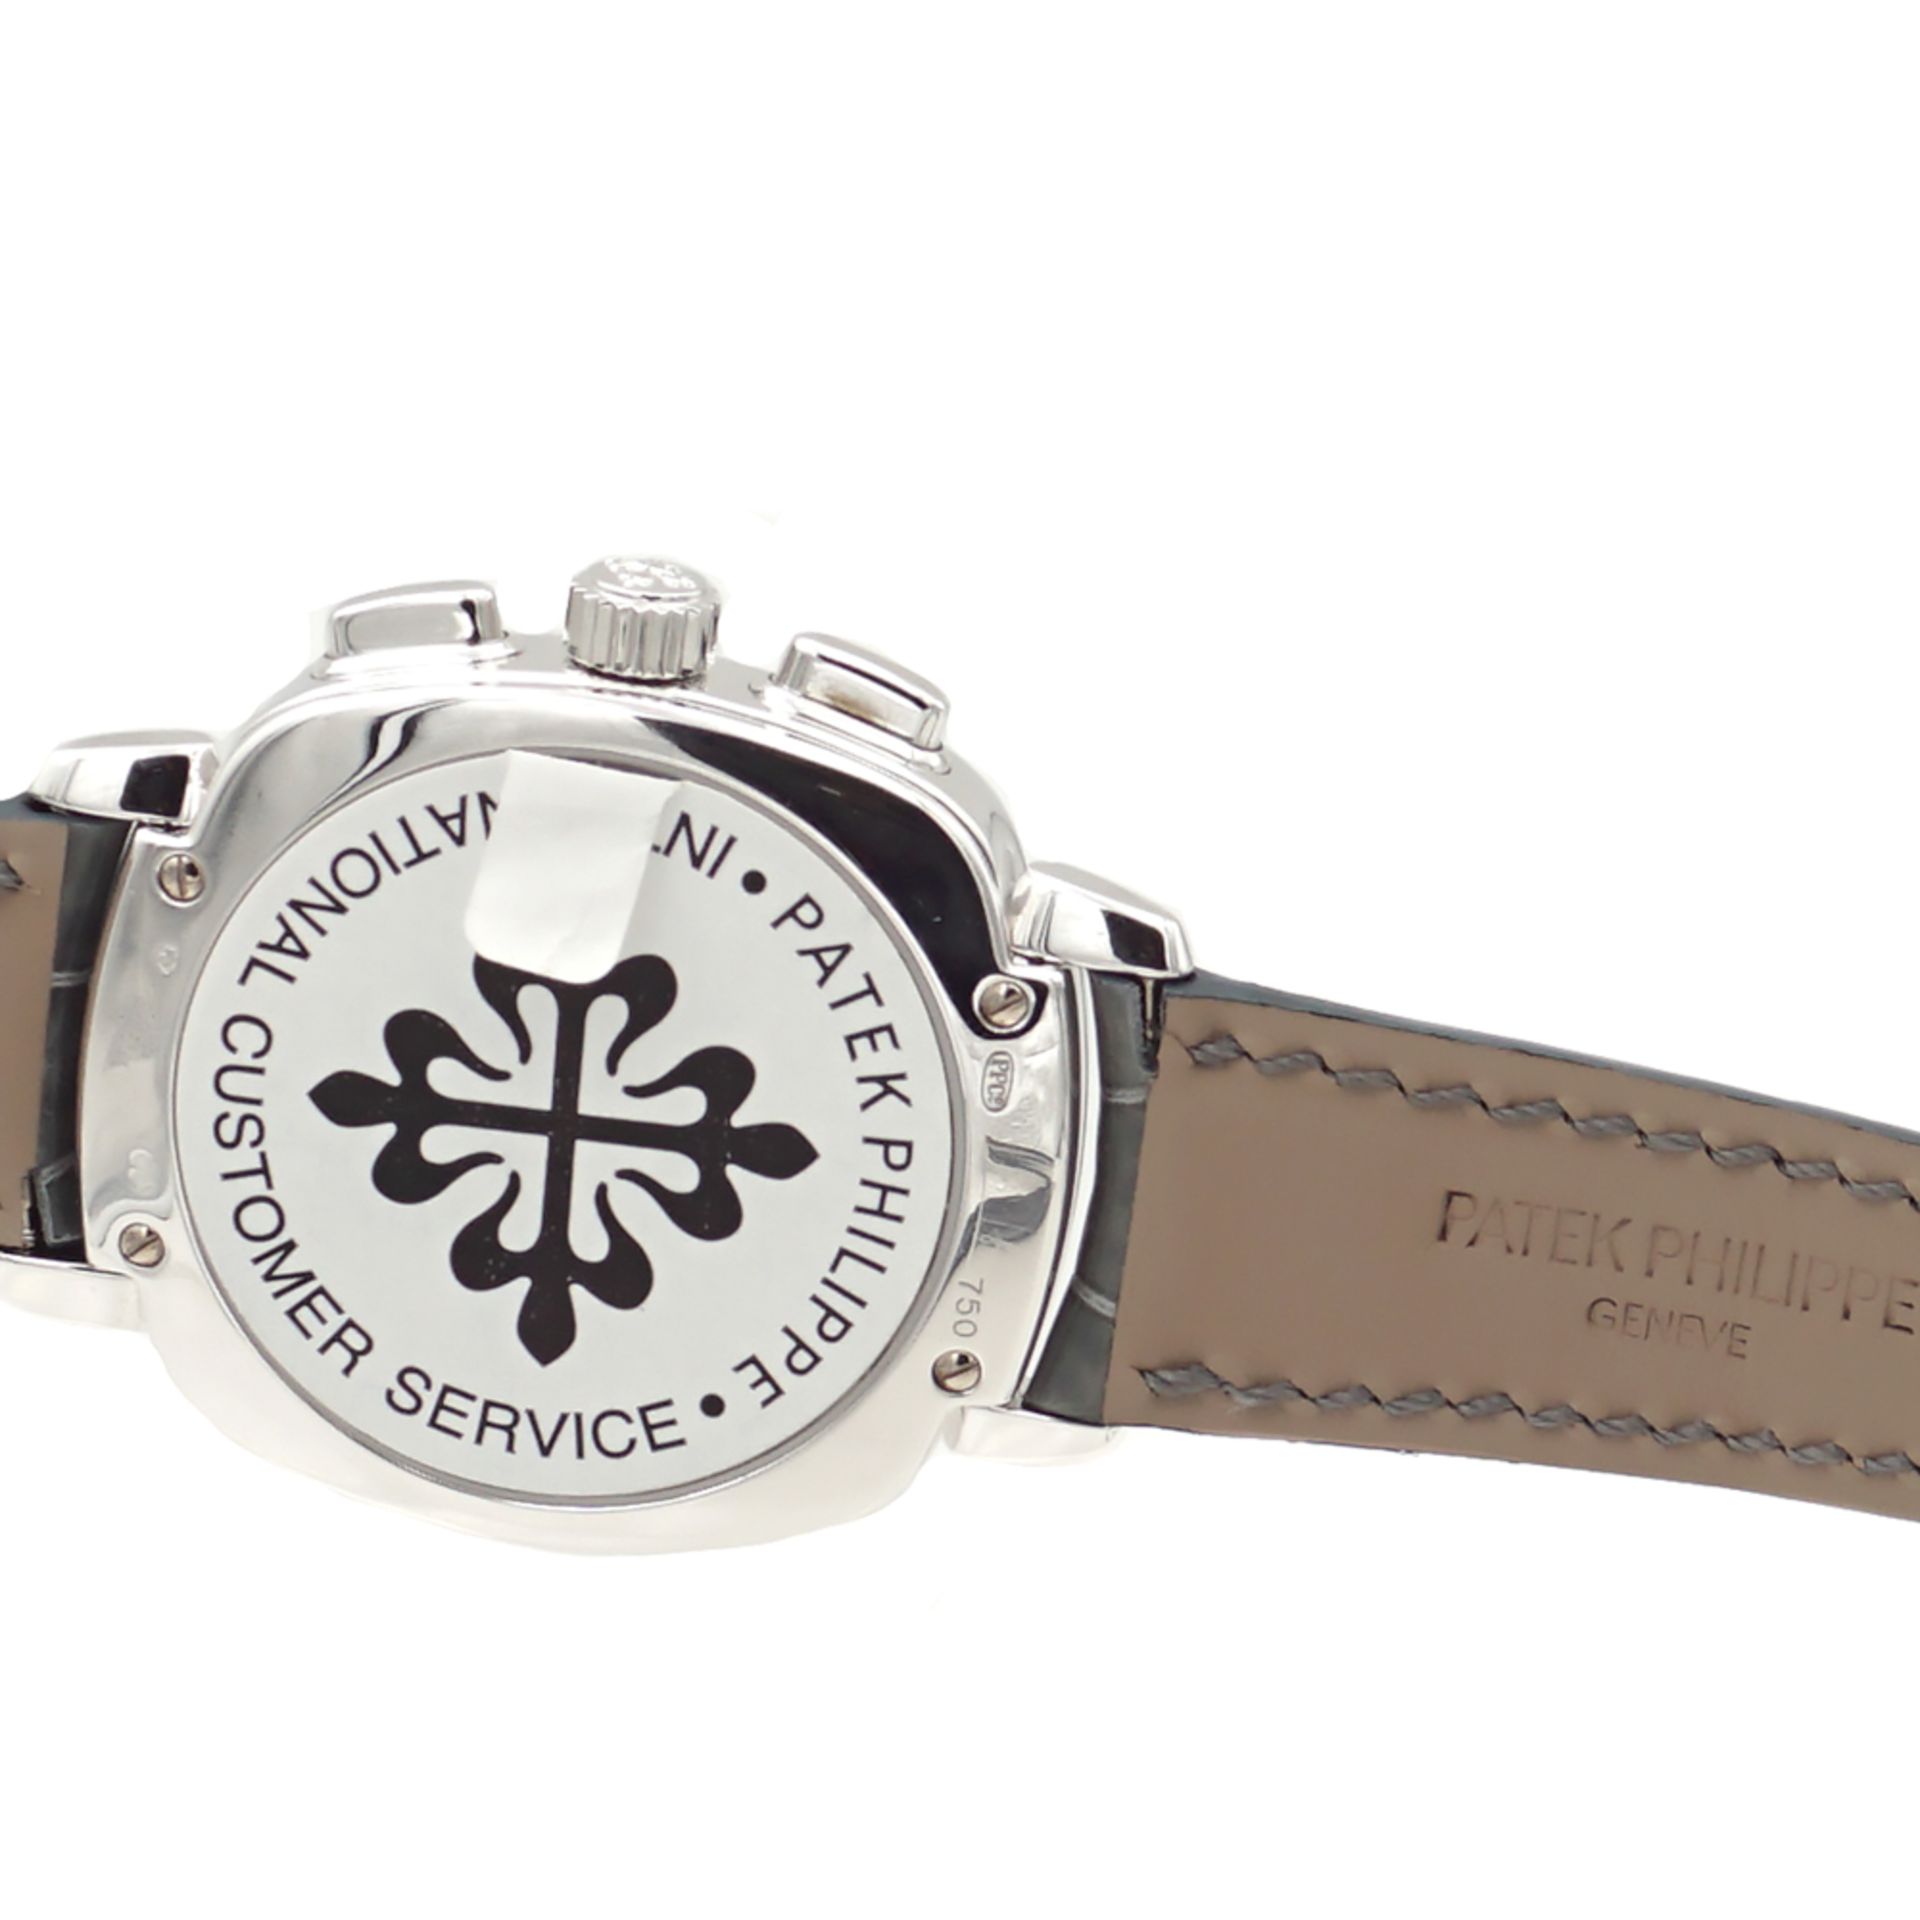 Patek Philippe Ladies First Bicompax Chronograph watch ref. 7071G010 - Image 4 of 4